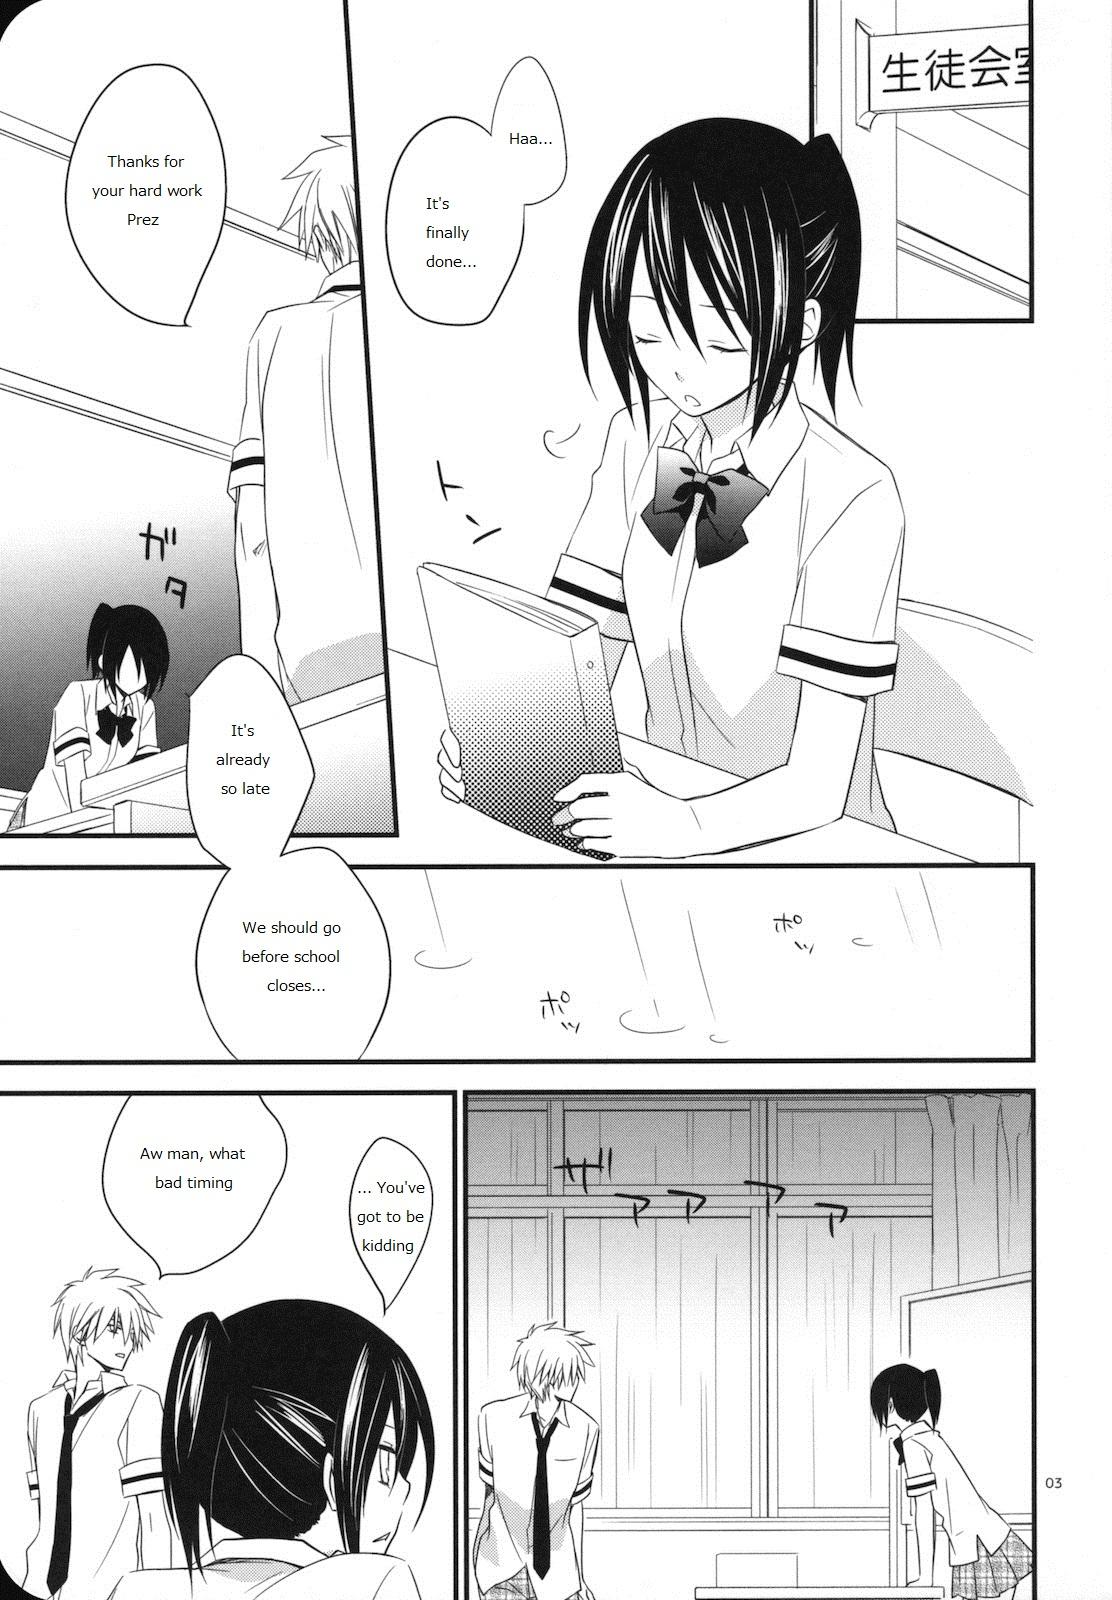 Scandal elle*2 - Kaichou wa maid sama Young Tits - Page 2